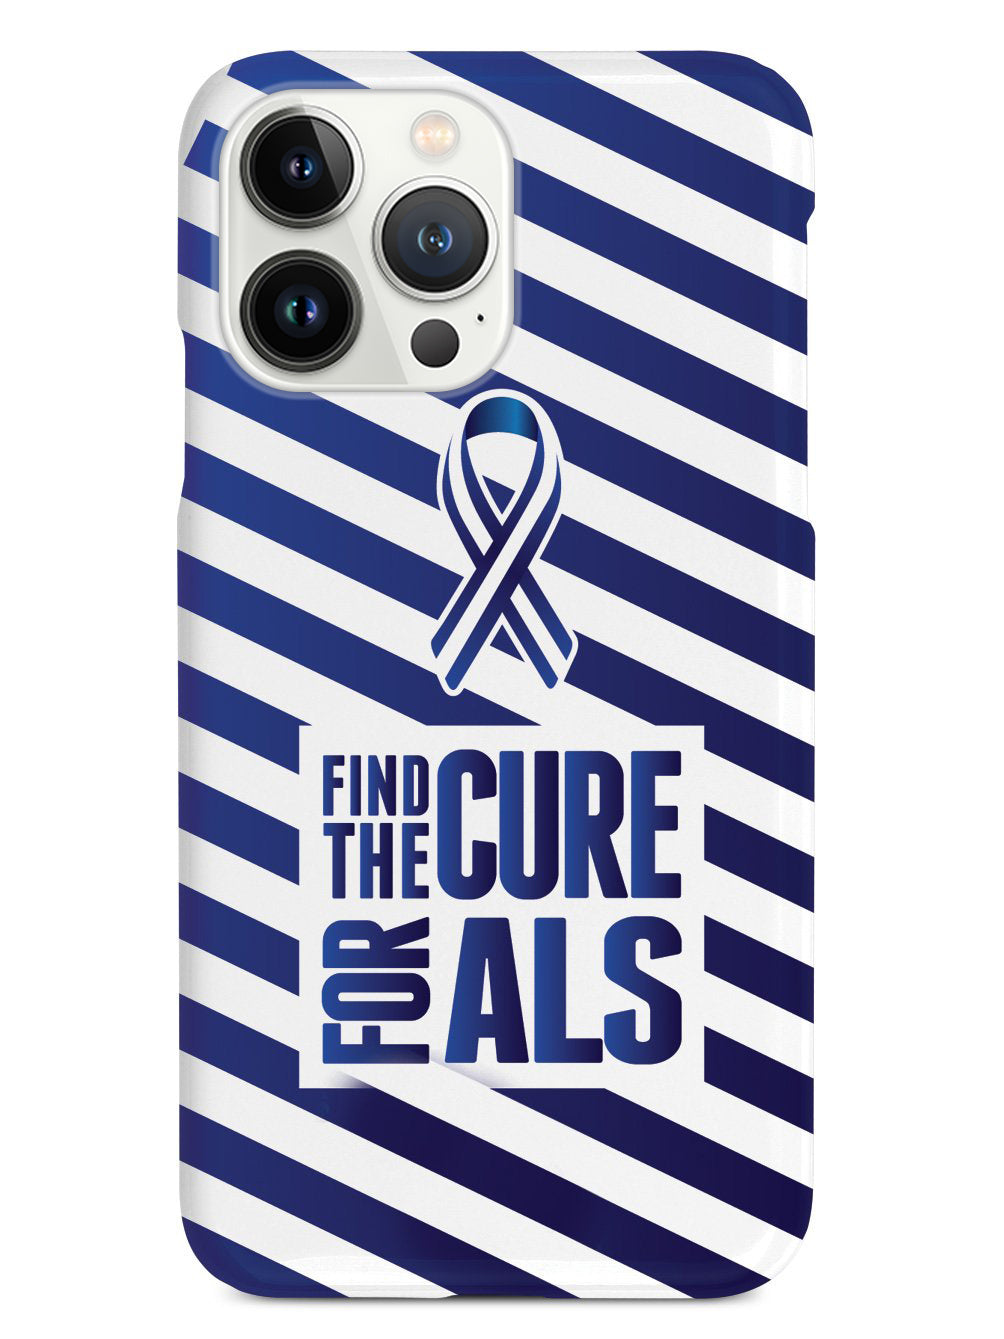 ALS Awareness Case